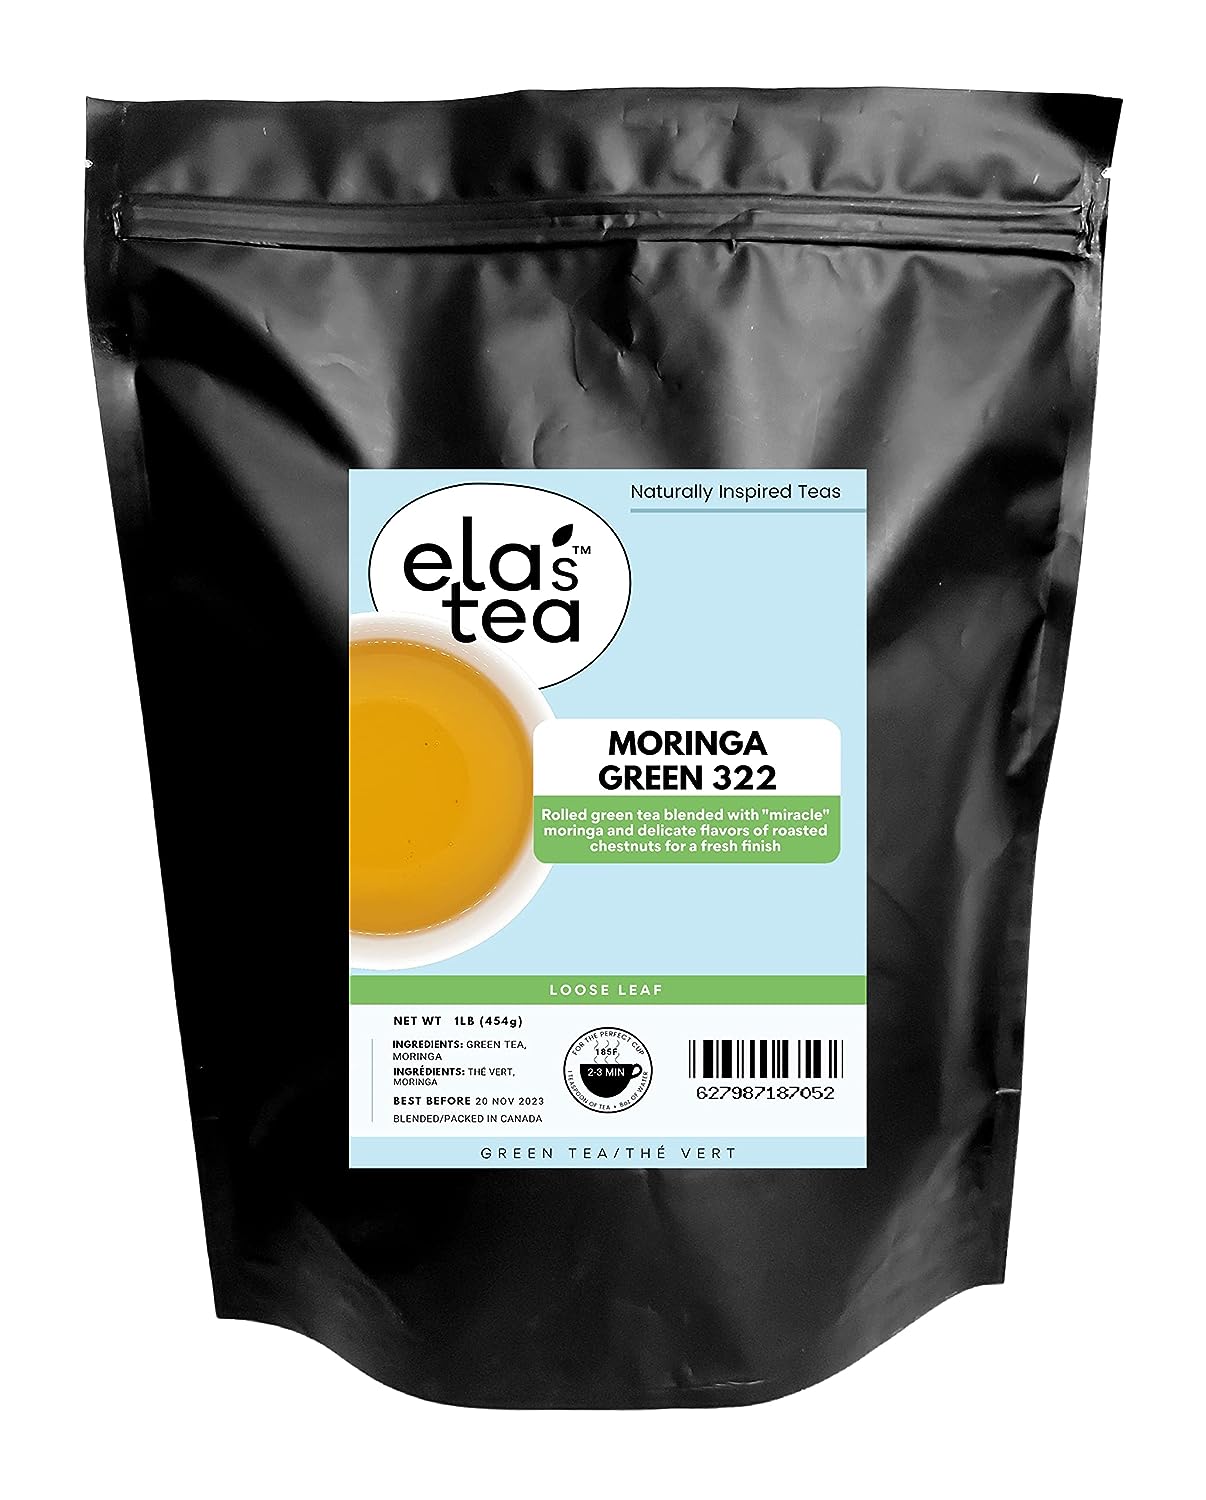 Ela’s Tea Moringa Green 322 | Premium Loose Leaf Green Tea | Smooth with Moringa for Delicate Sweet Flavor | Antioxidant Rich, Immune Boosting | Hot or Iced Tea | 120 Cups Brewed